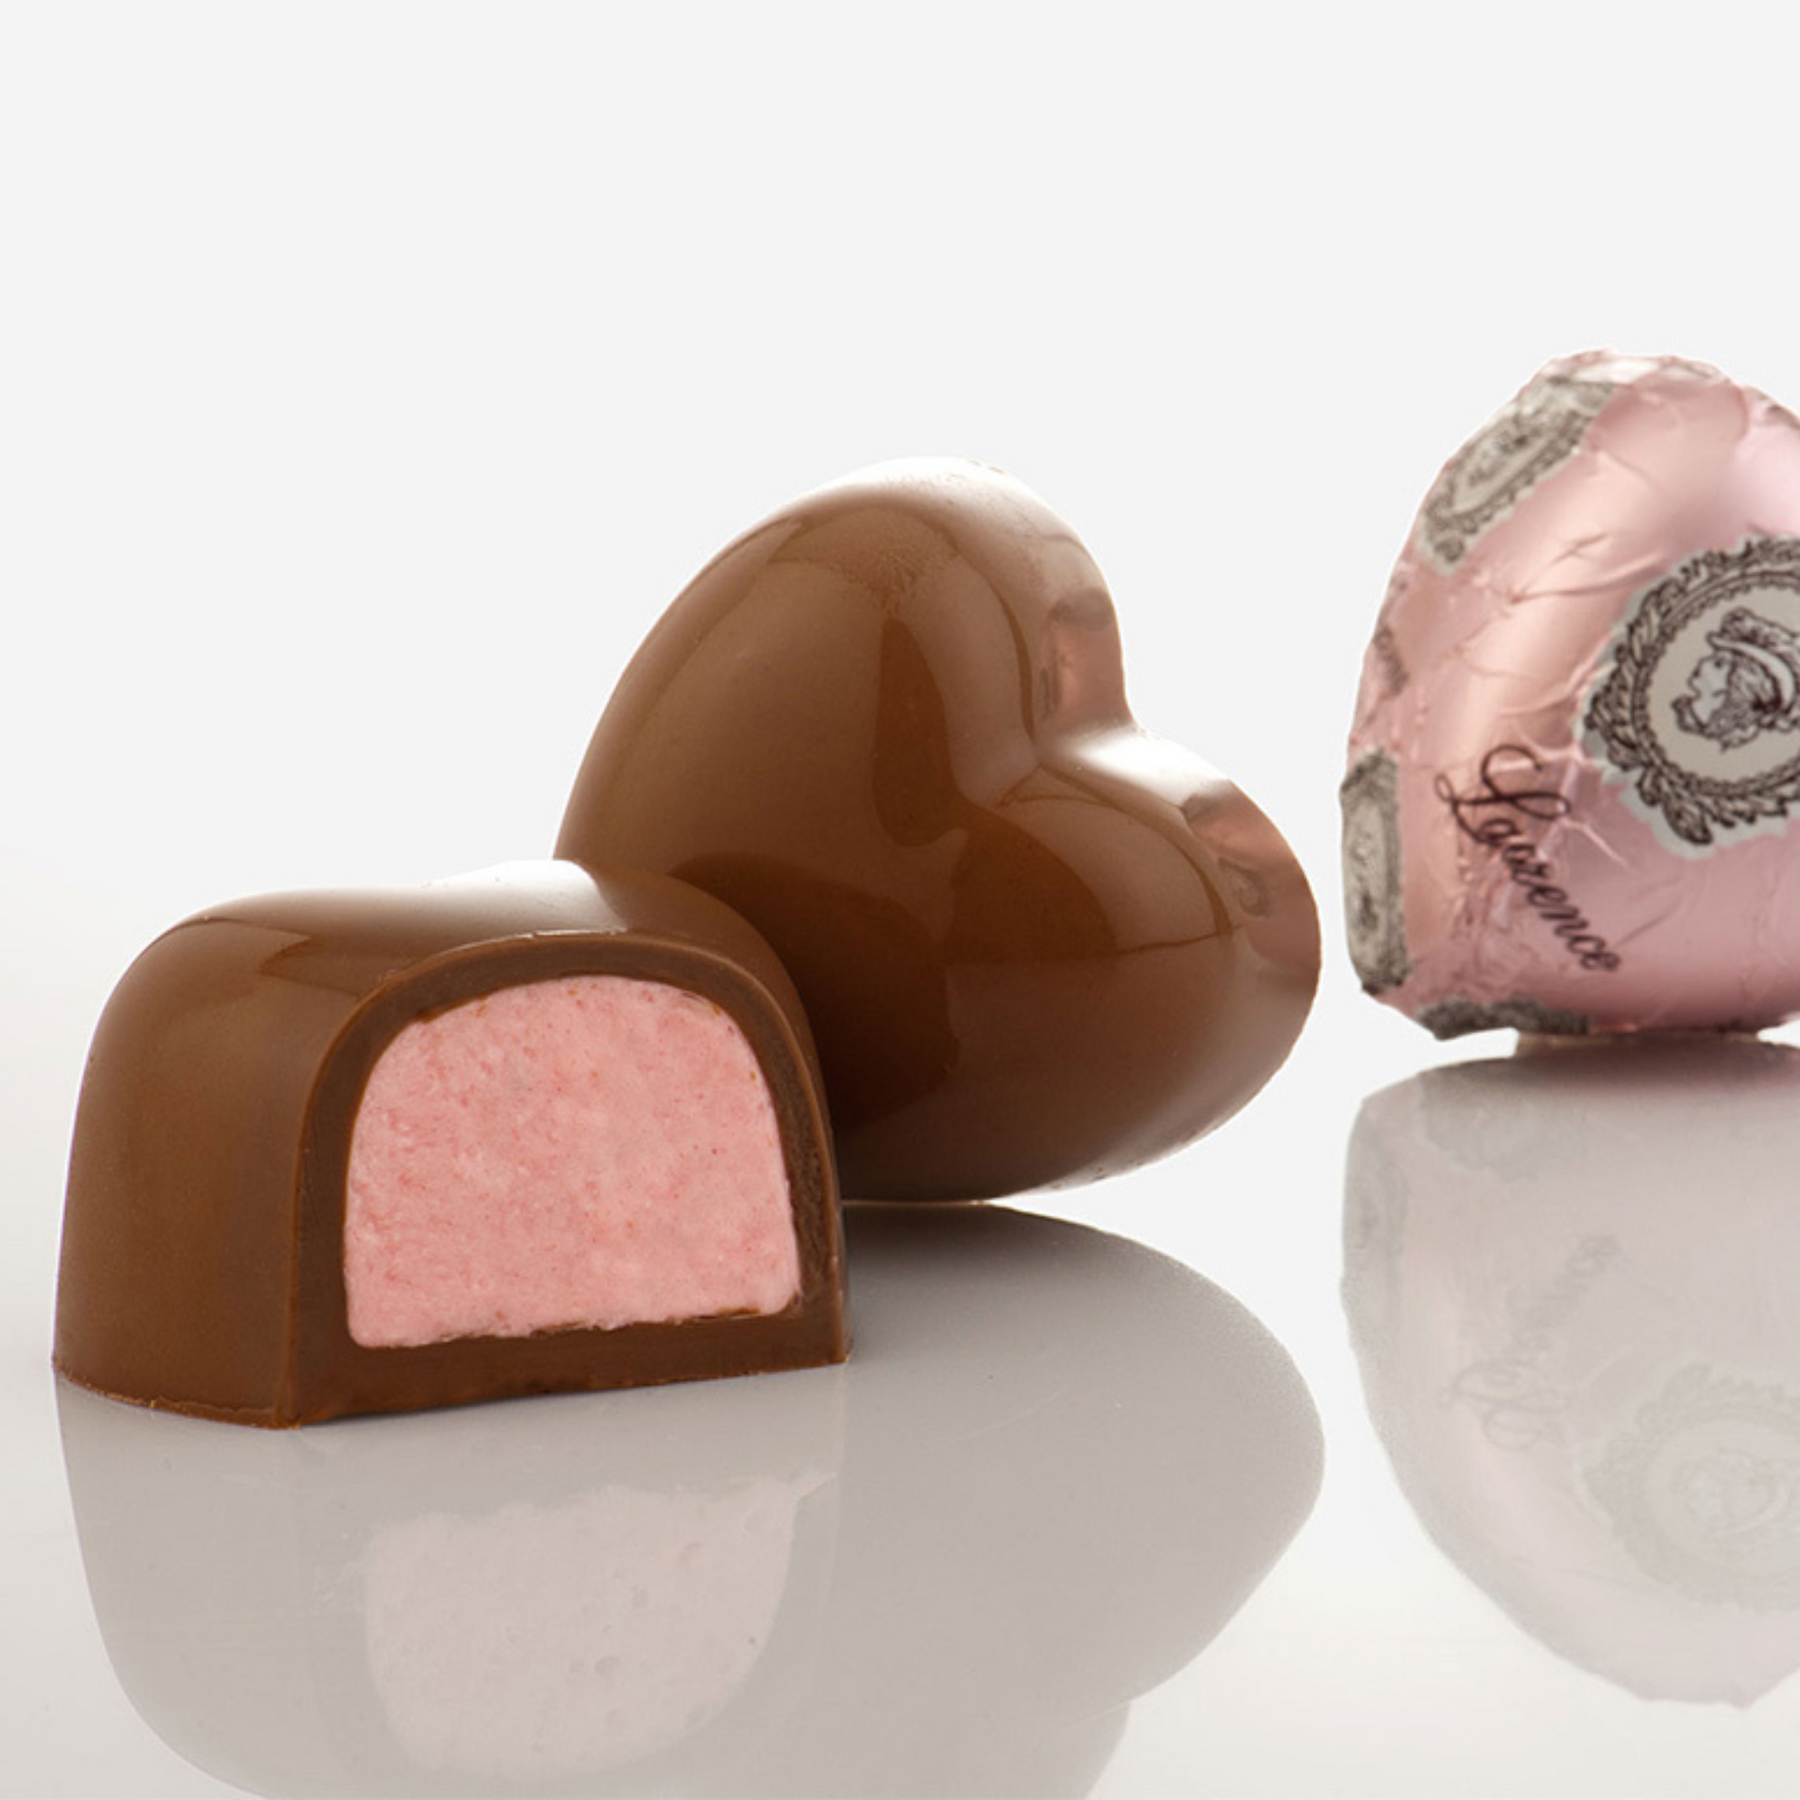 Цукерки з молочного шоколаду з полуничним суфле/Laurence Strawberry heart, 3 шт (≈100 г)